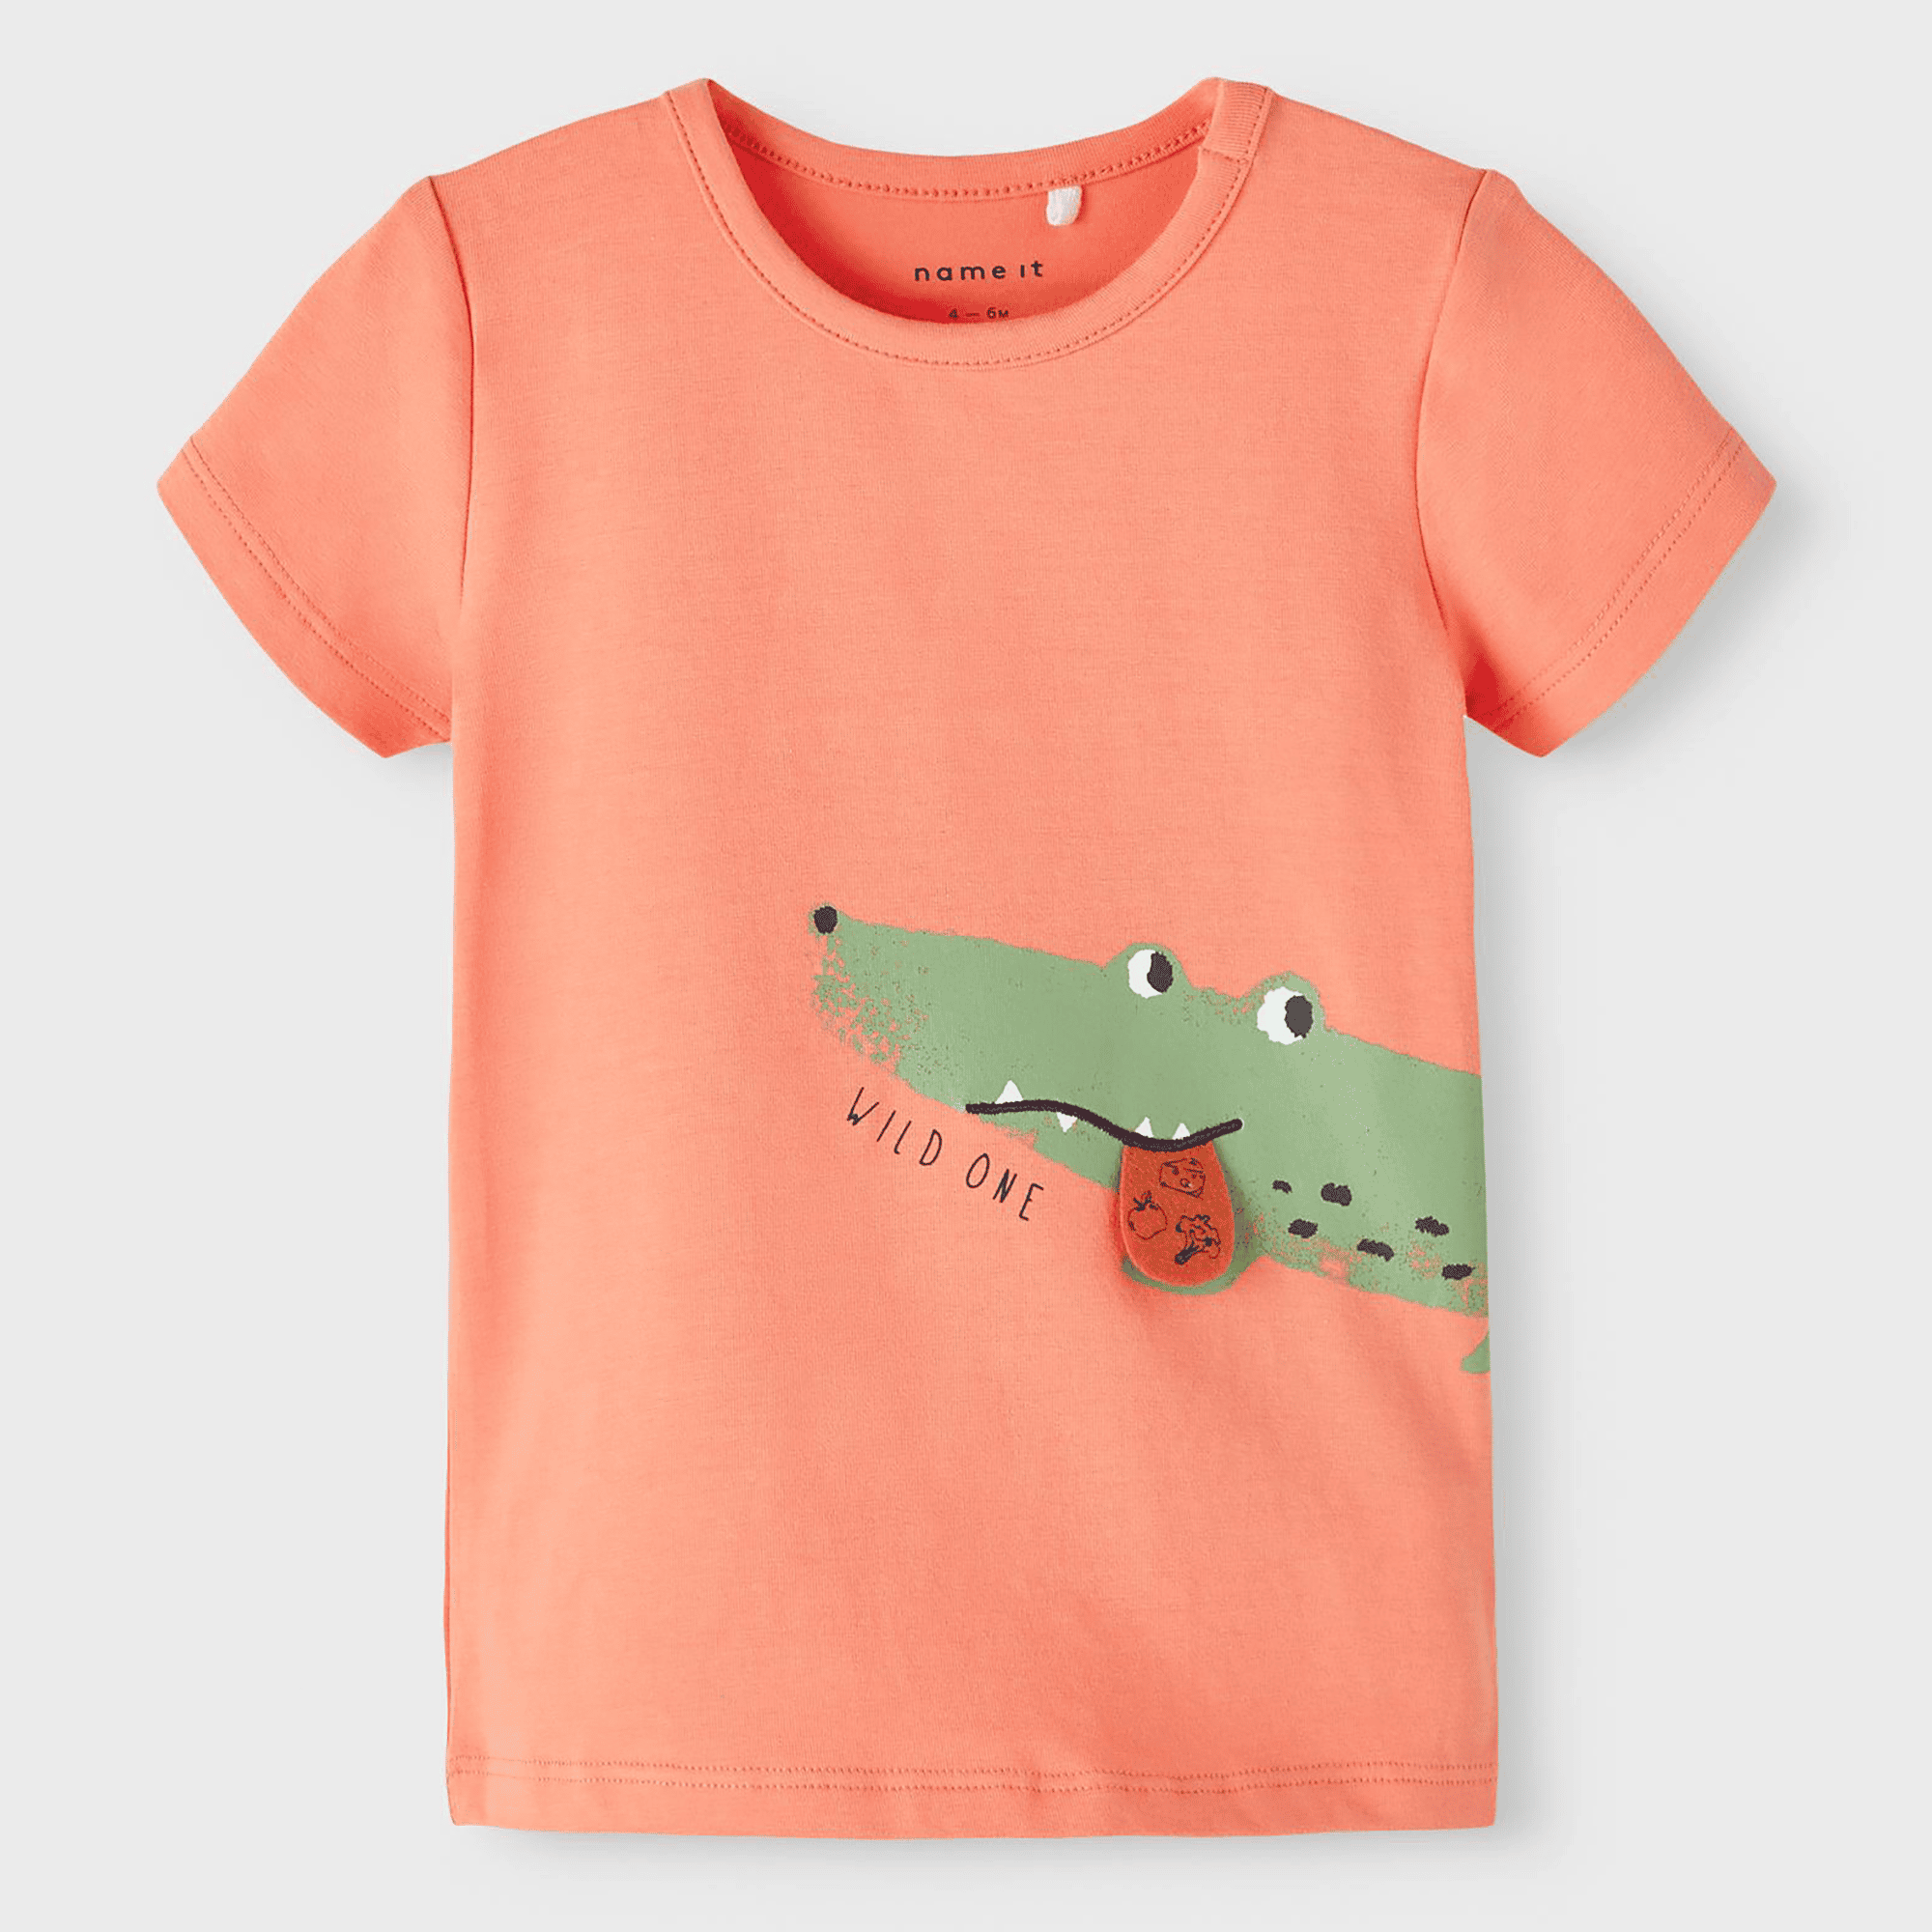 T-Shirt Krokodil name it Orange M2000583919209 1